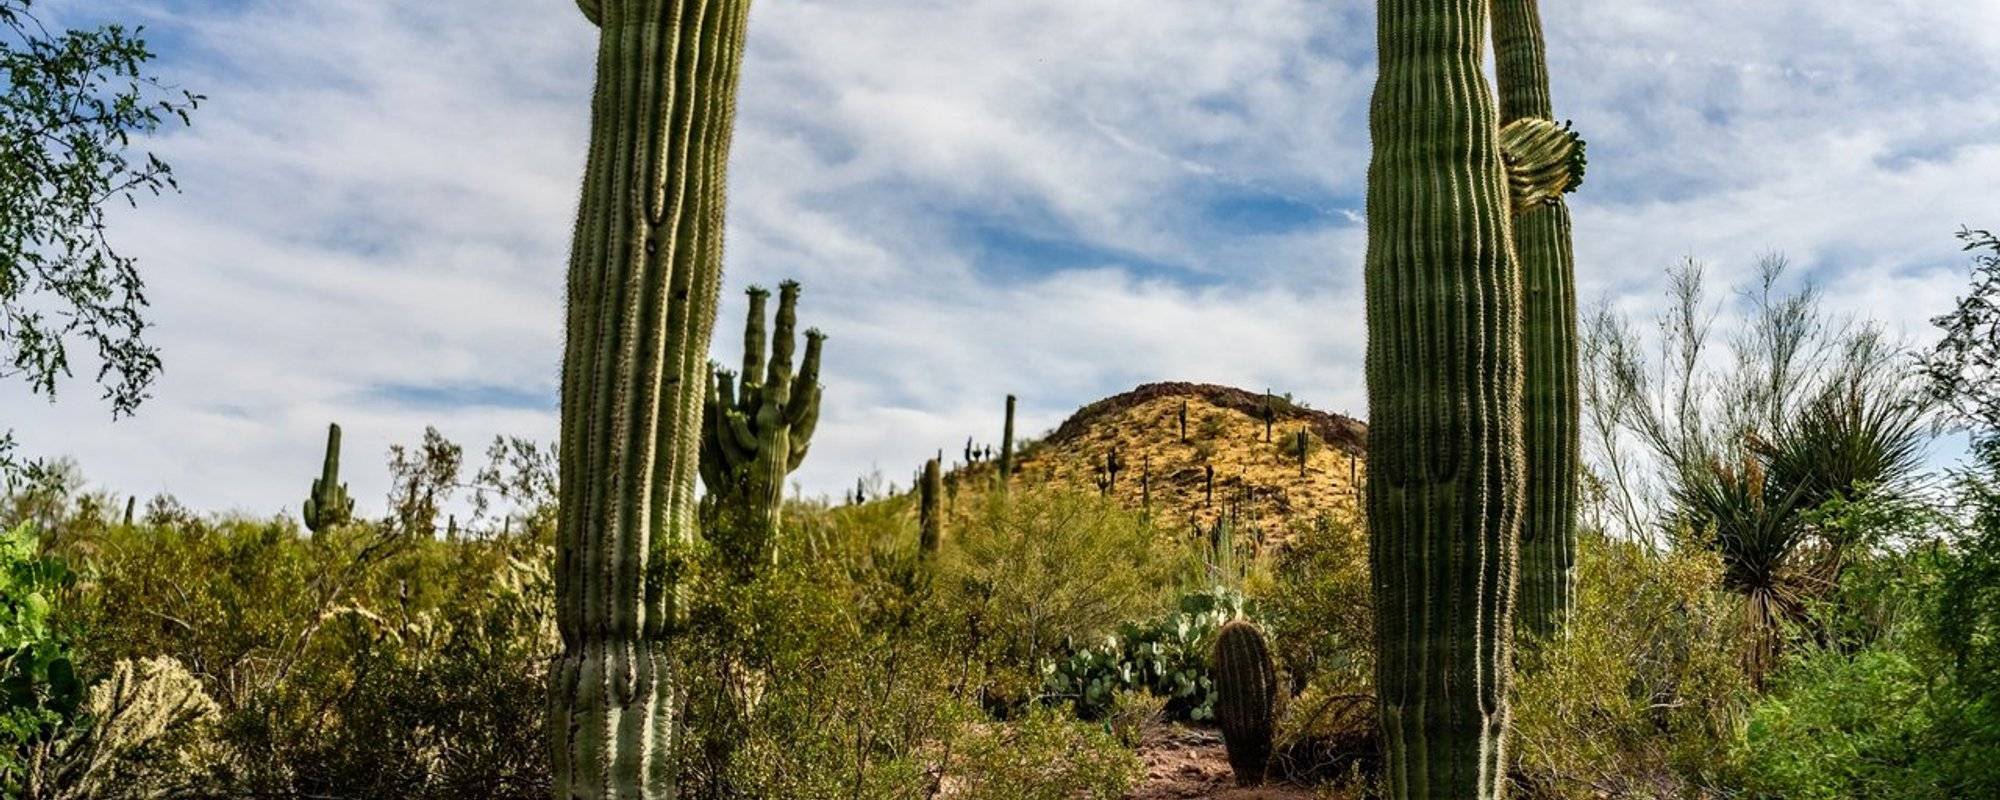 Desert Botanical Garden: Sonoran Wonder in Phoenix Arizona